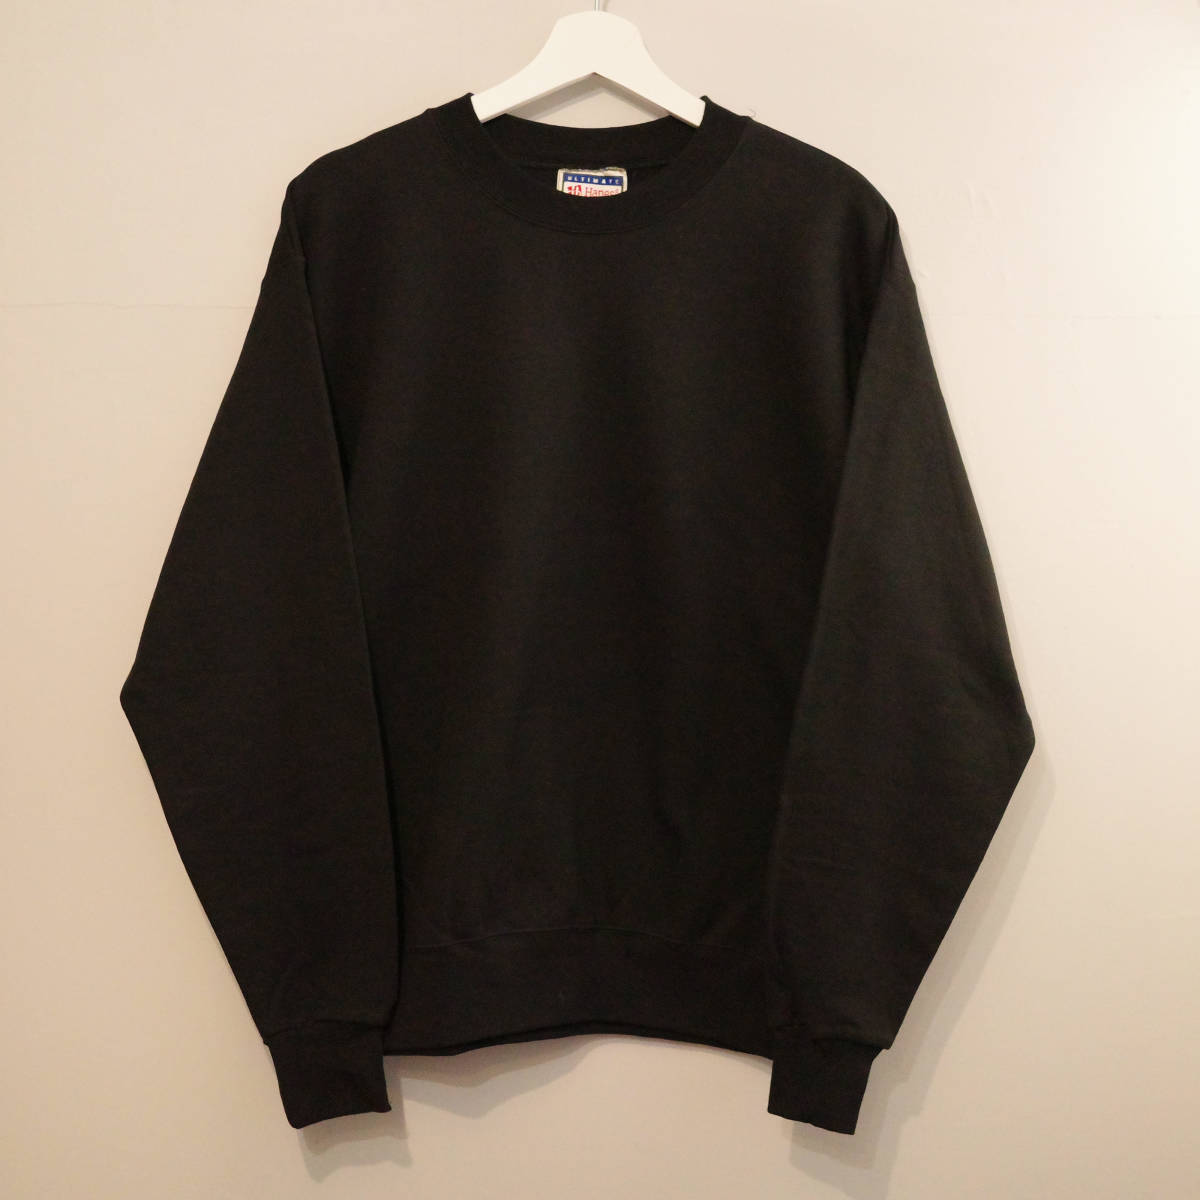 Dead stock Hanes solid sweat shirt black size:S(34-36) 90s vintage ヘインズ スウェット ②